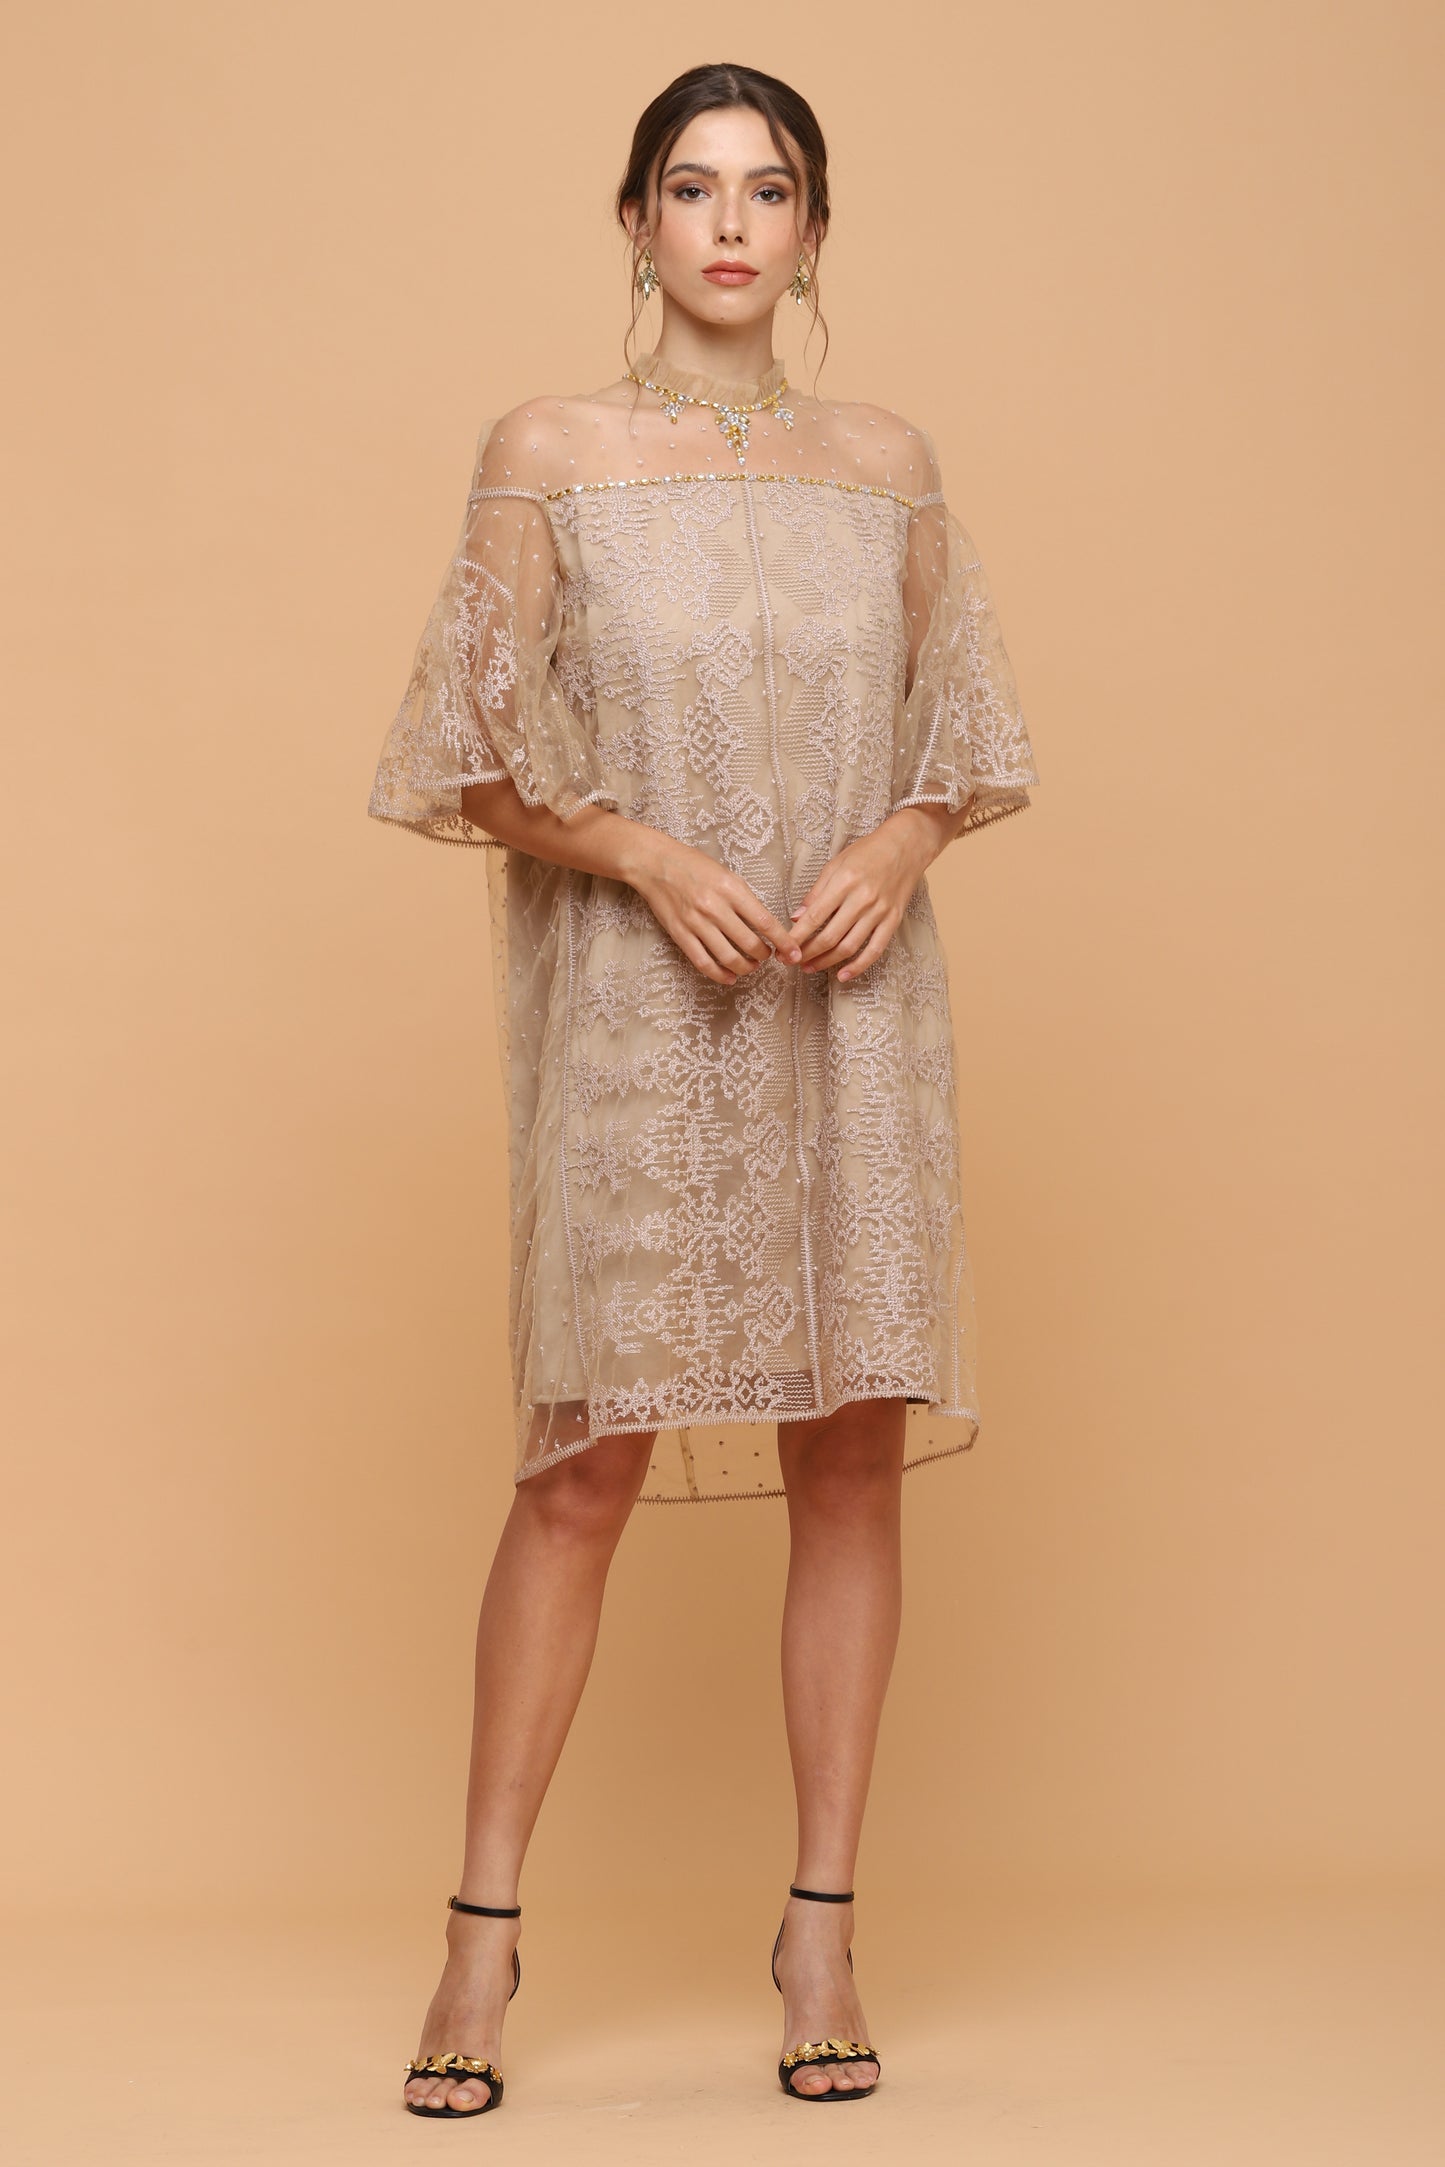 Classy - Beige Soft Ethnic Lace Dress